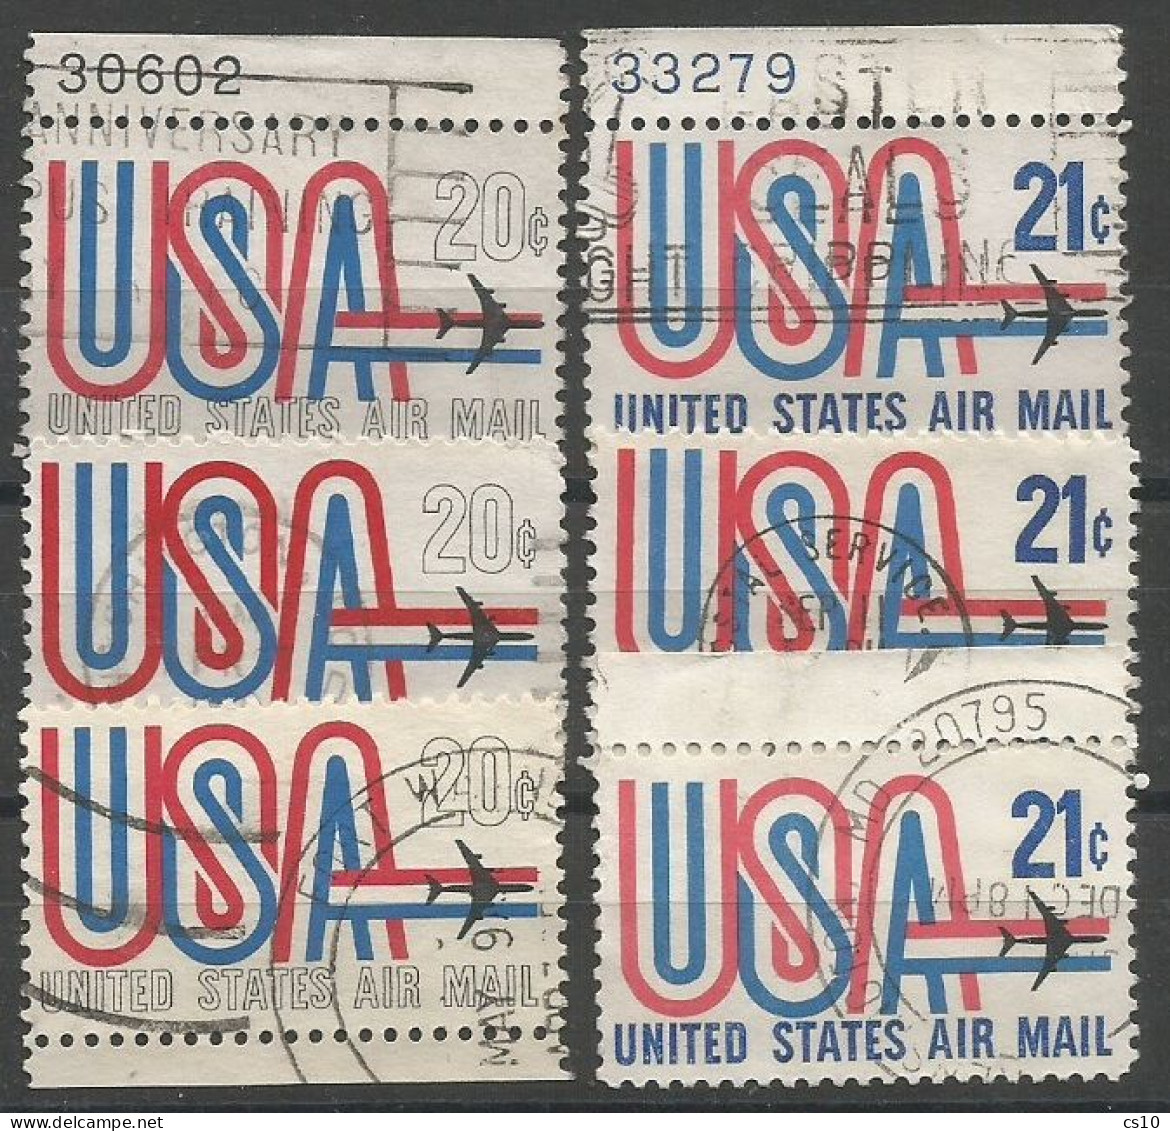 USA Ribbon Airmail 1968/73 SC.# C75+C81 . #2 With Plate  Number + # VFU Circular PMk + #2 Sheet Margin - Plaatnummers